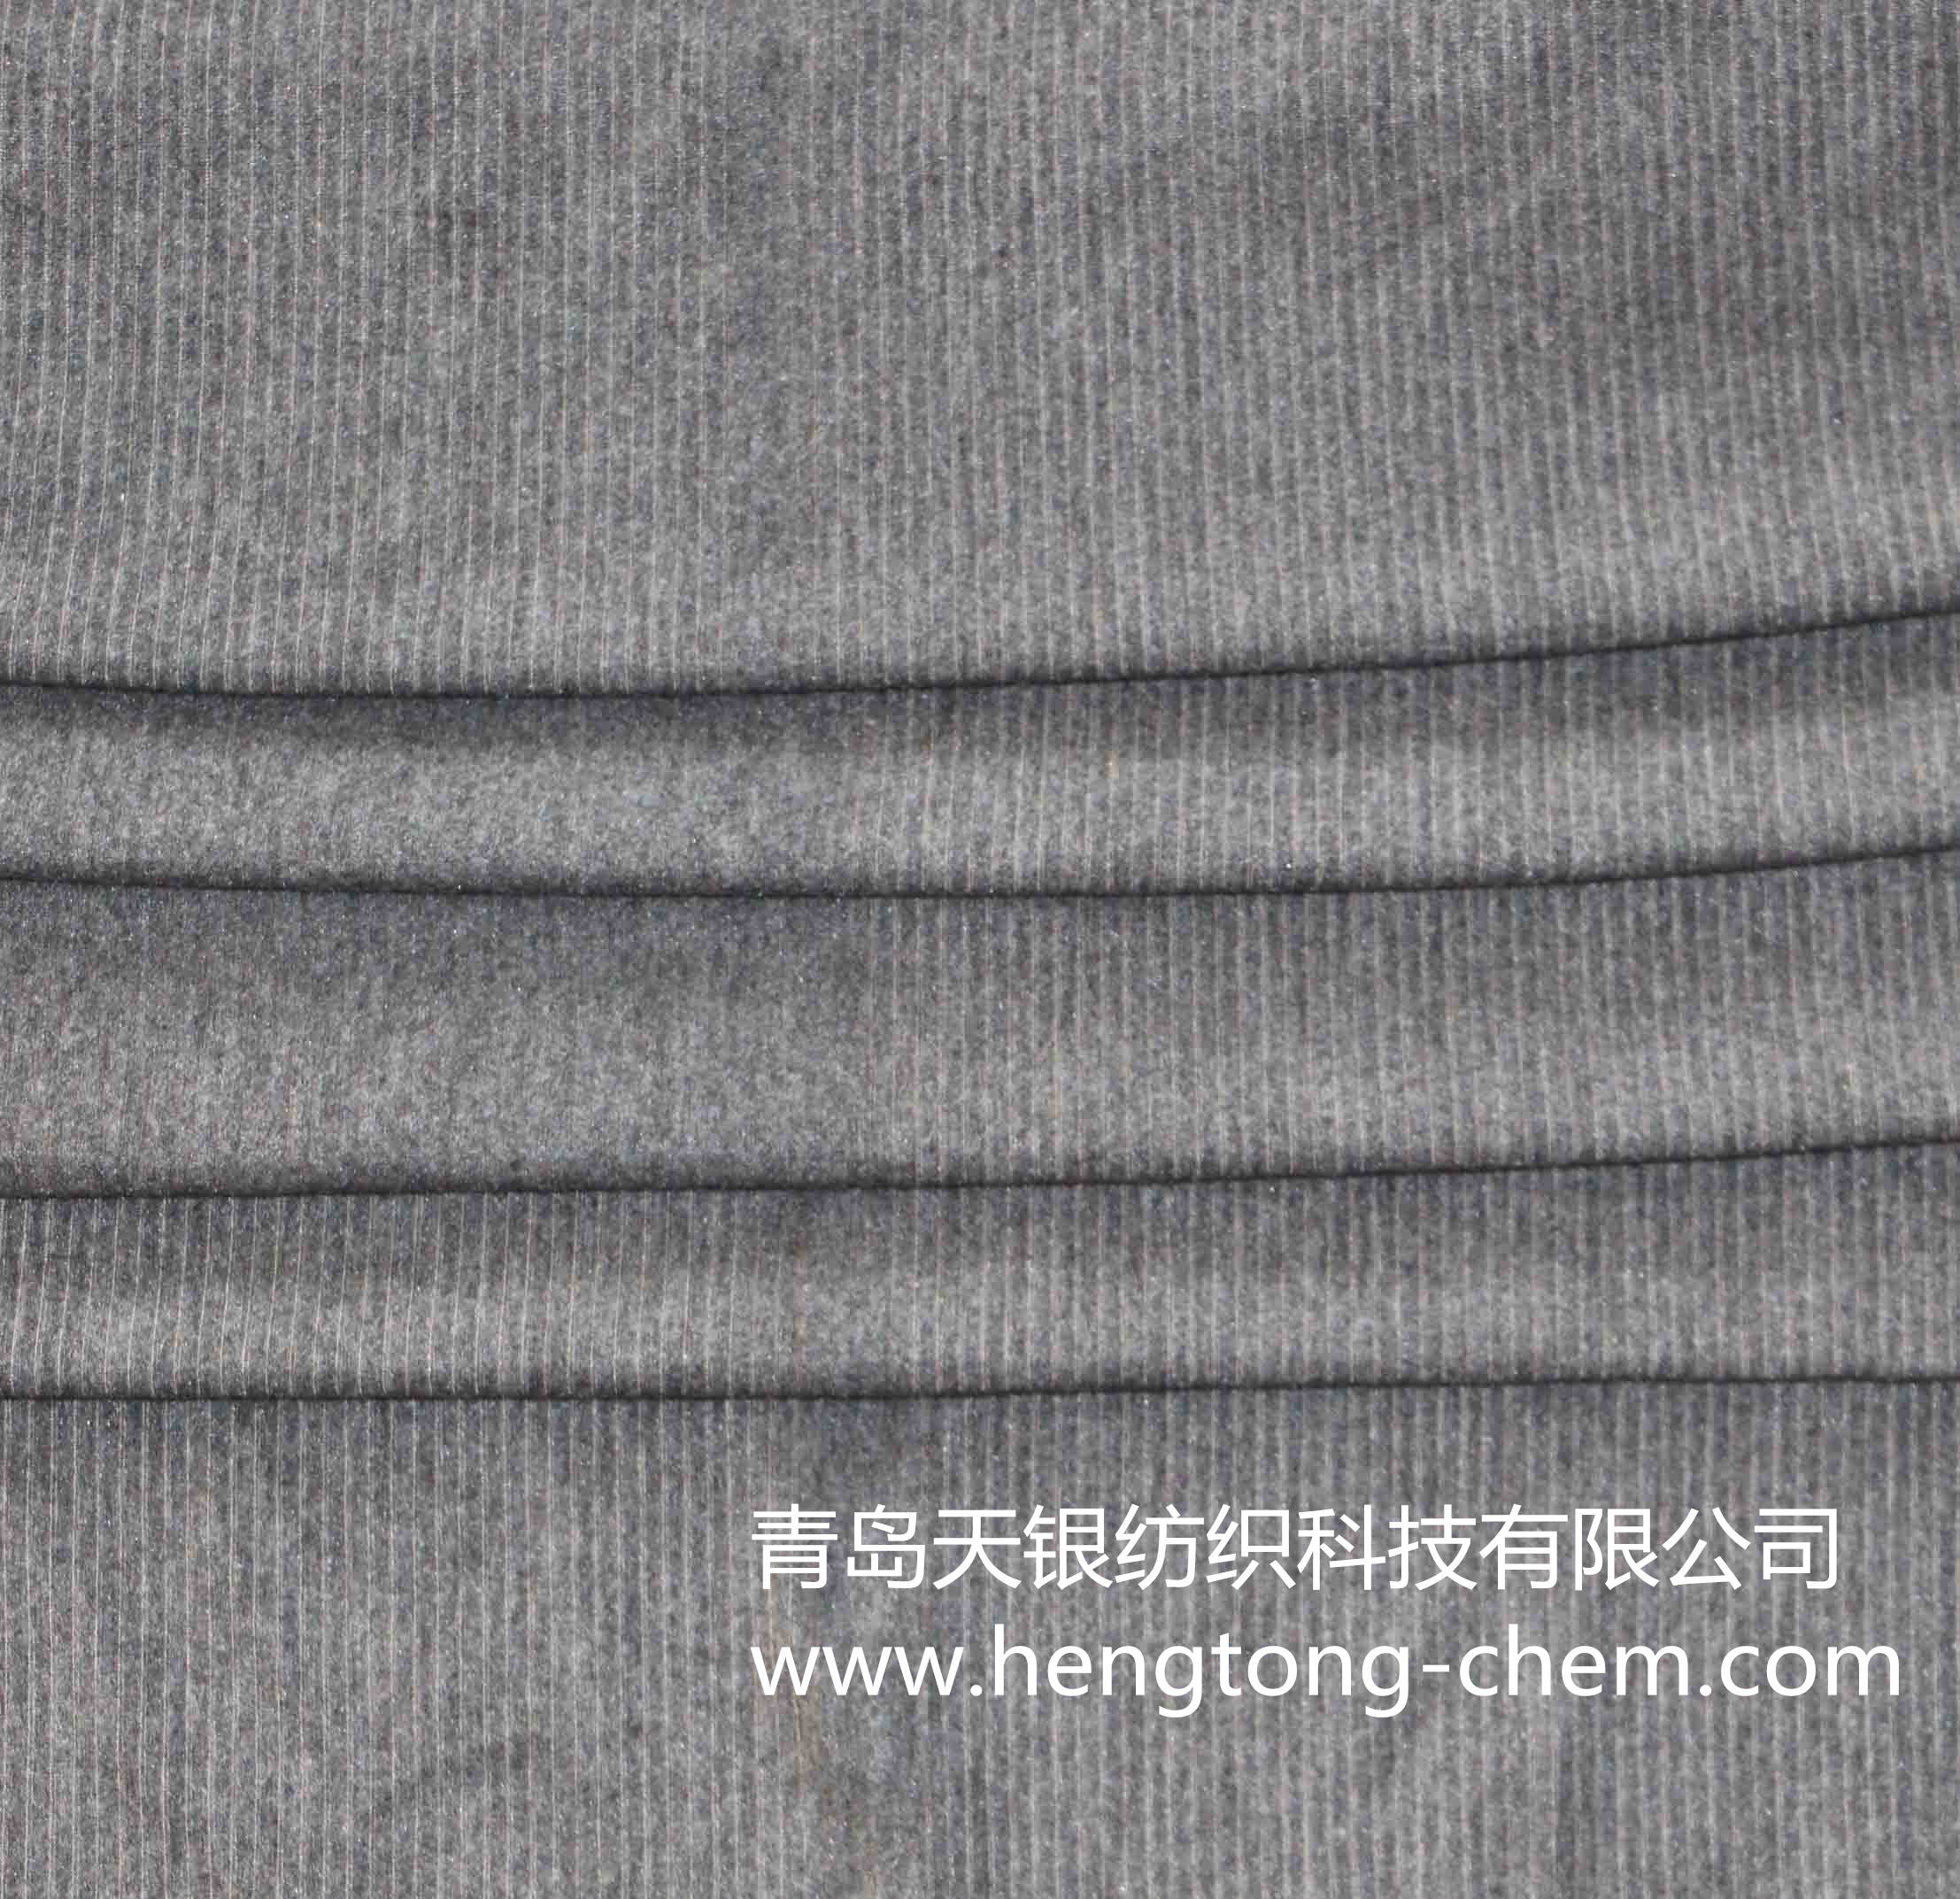 Silver fiber antibacterial underwear fabric - dark grey